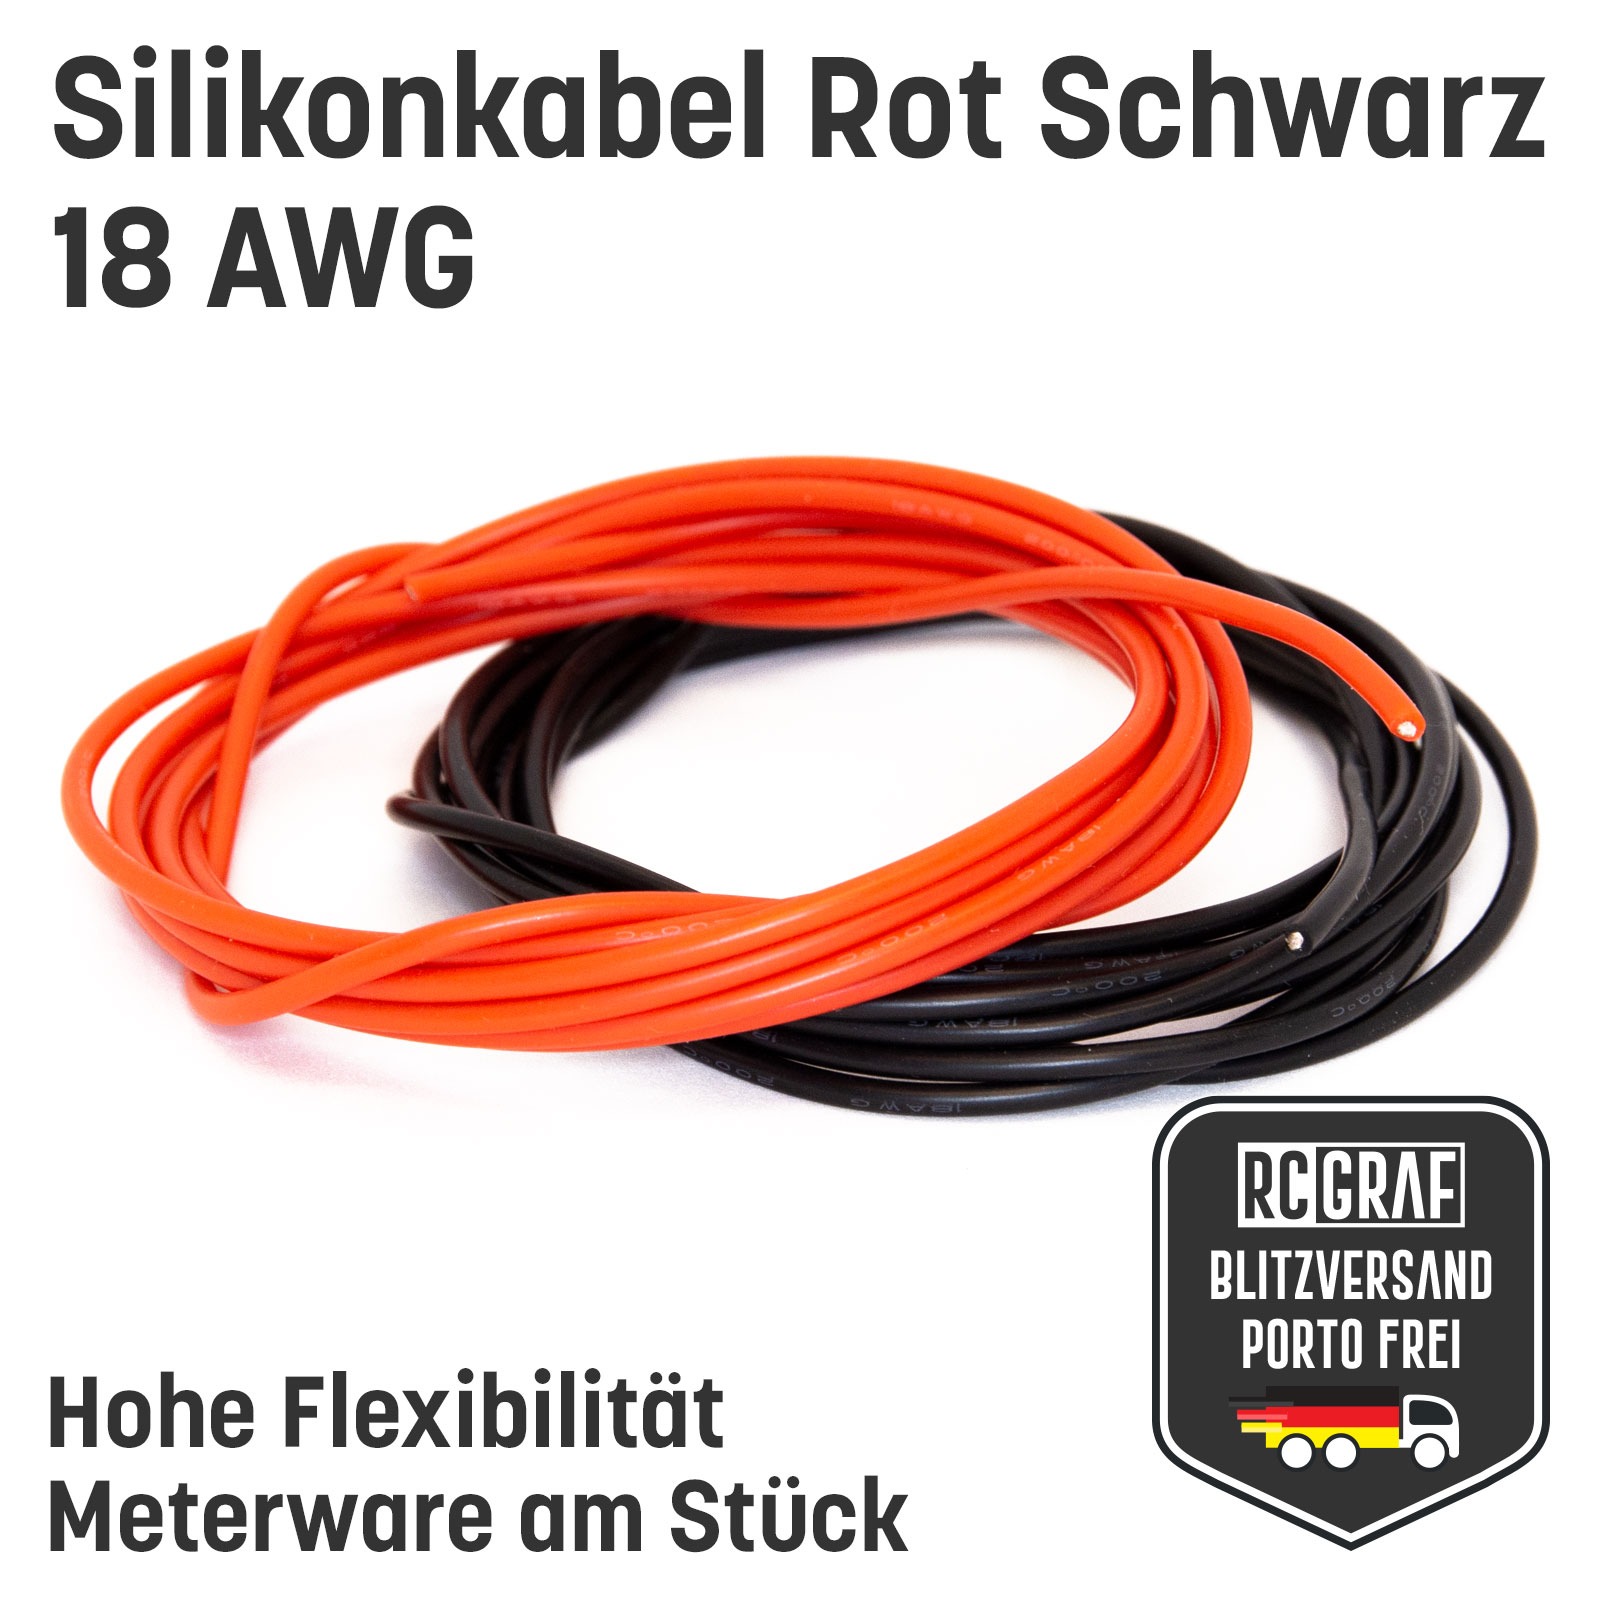 Silikonkabel 18 AWG hochflexibel Rot Schwarz Kupfer RC Kabel